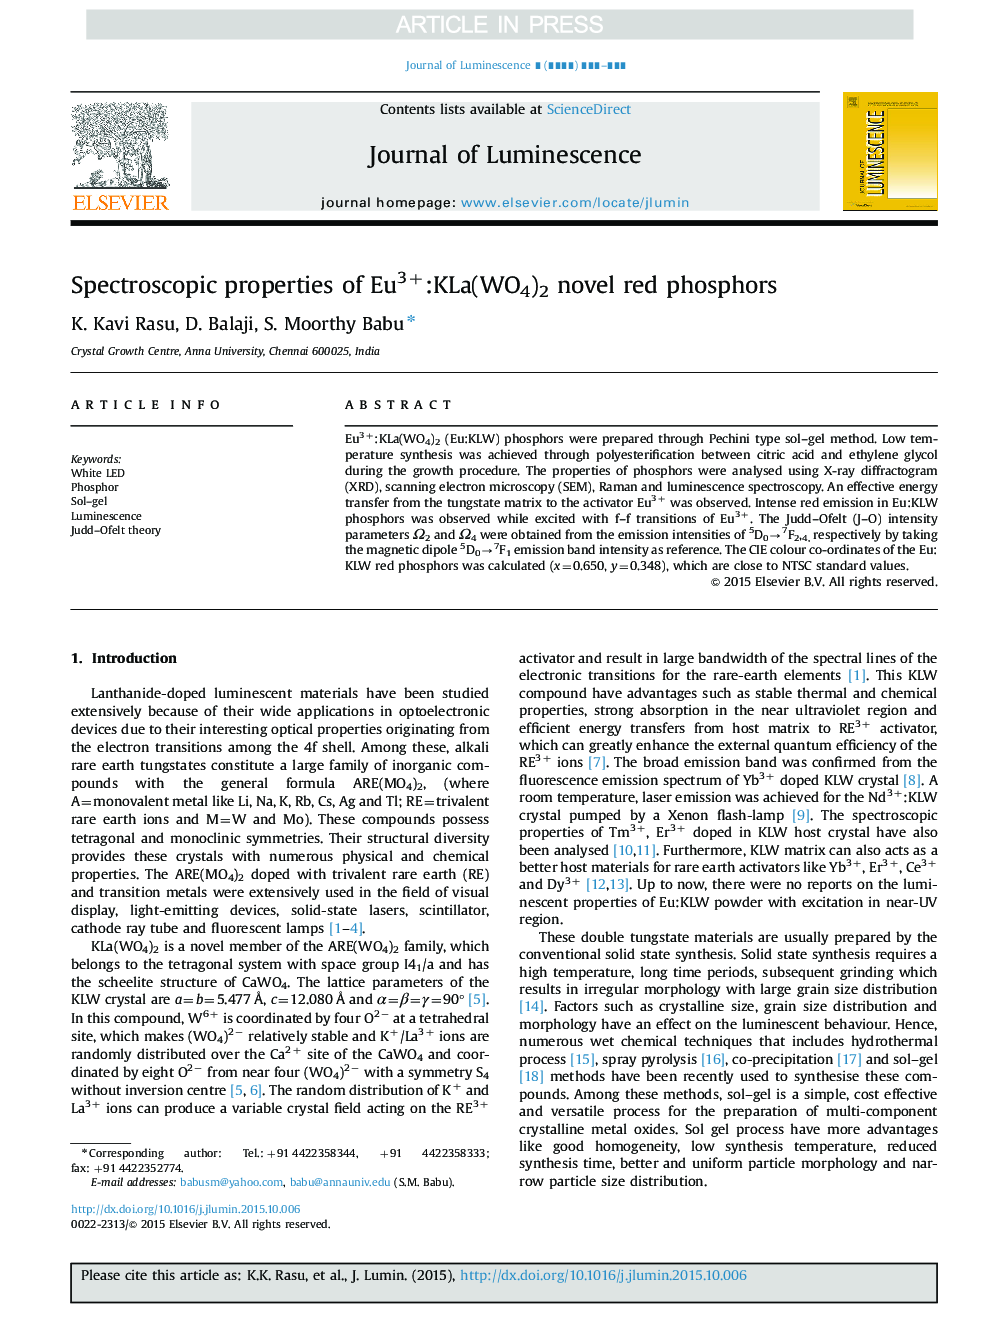 Spectroscopic properties of Eu3+:KLa(WO4)2 novel red phosphors